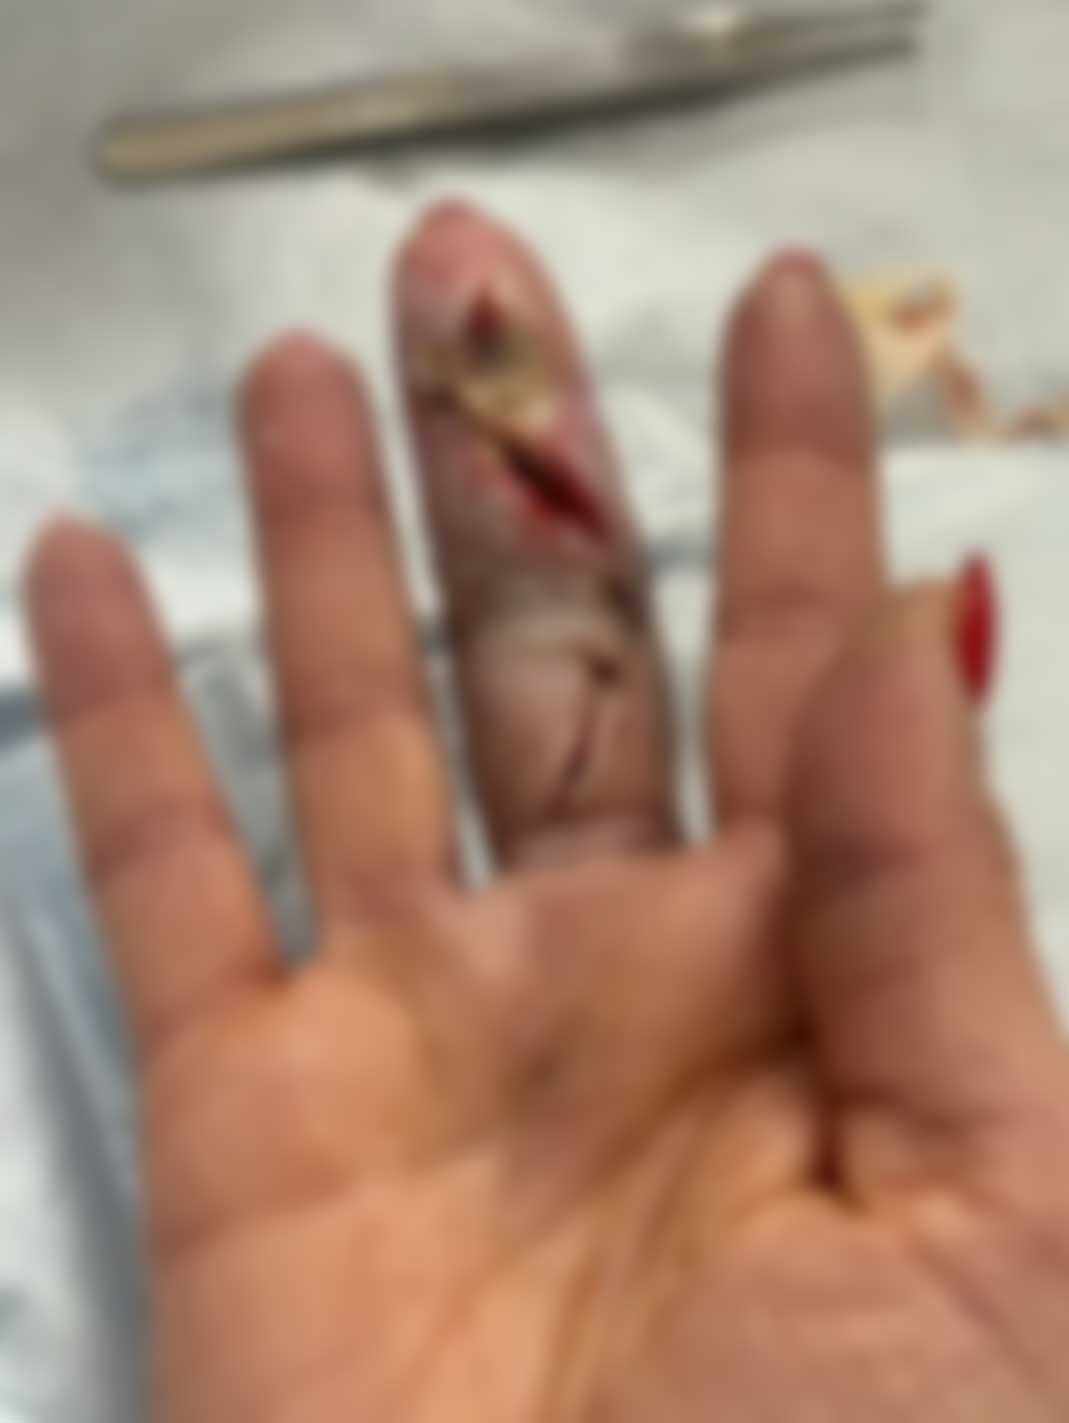 AEW明星CJ Perry因手指感染可能需再次手术